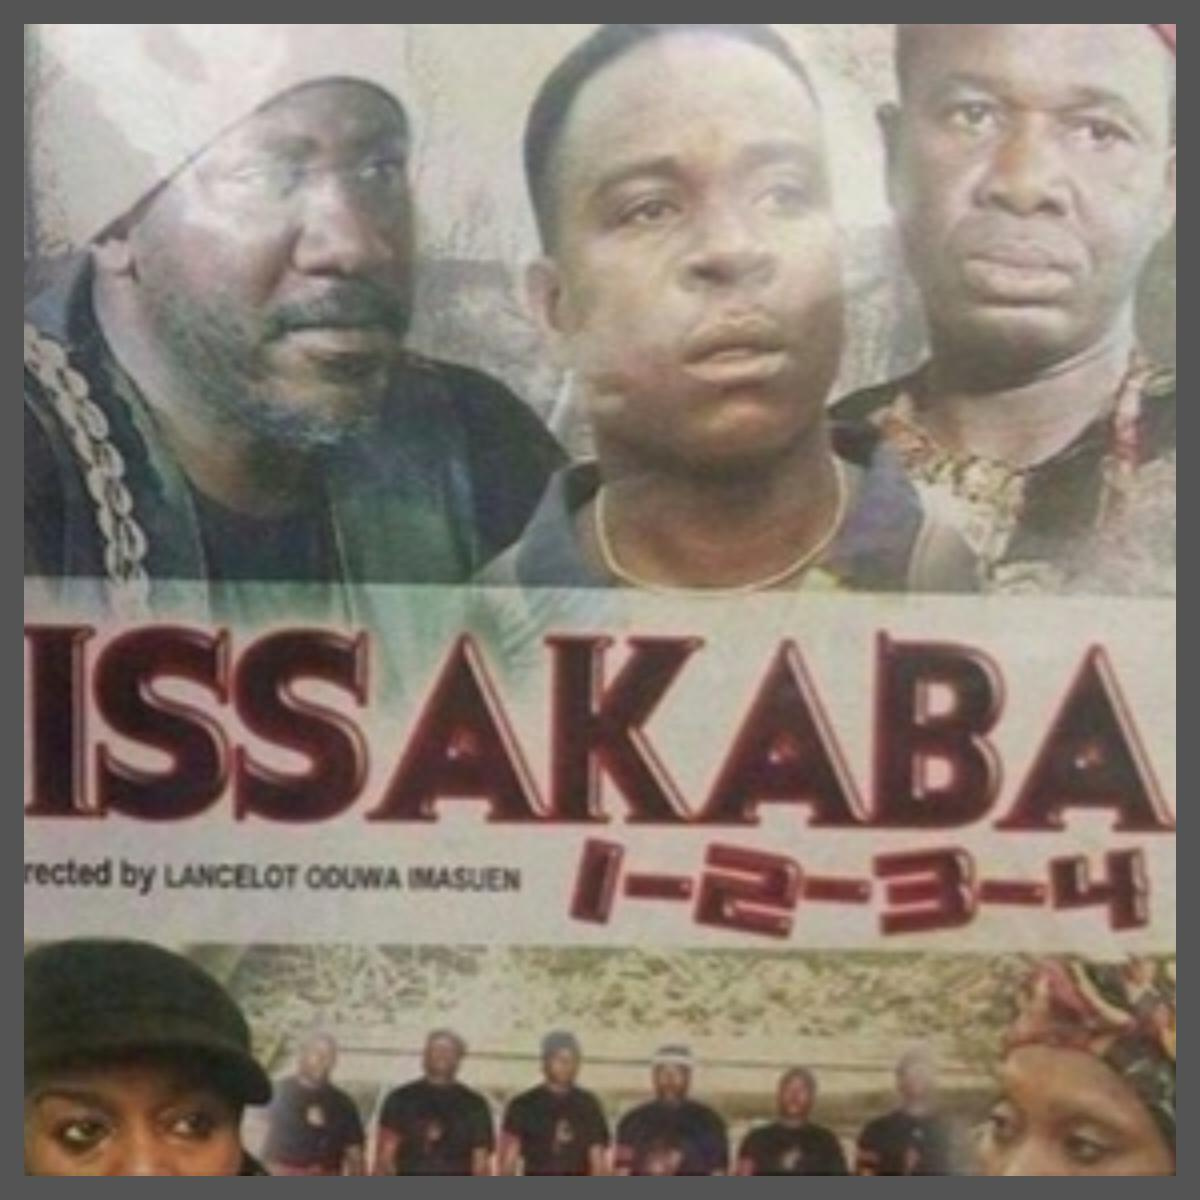 Amaechi Muonagor Nollywood Movies Issakaba - NollywoodCelebs